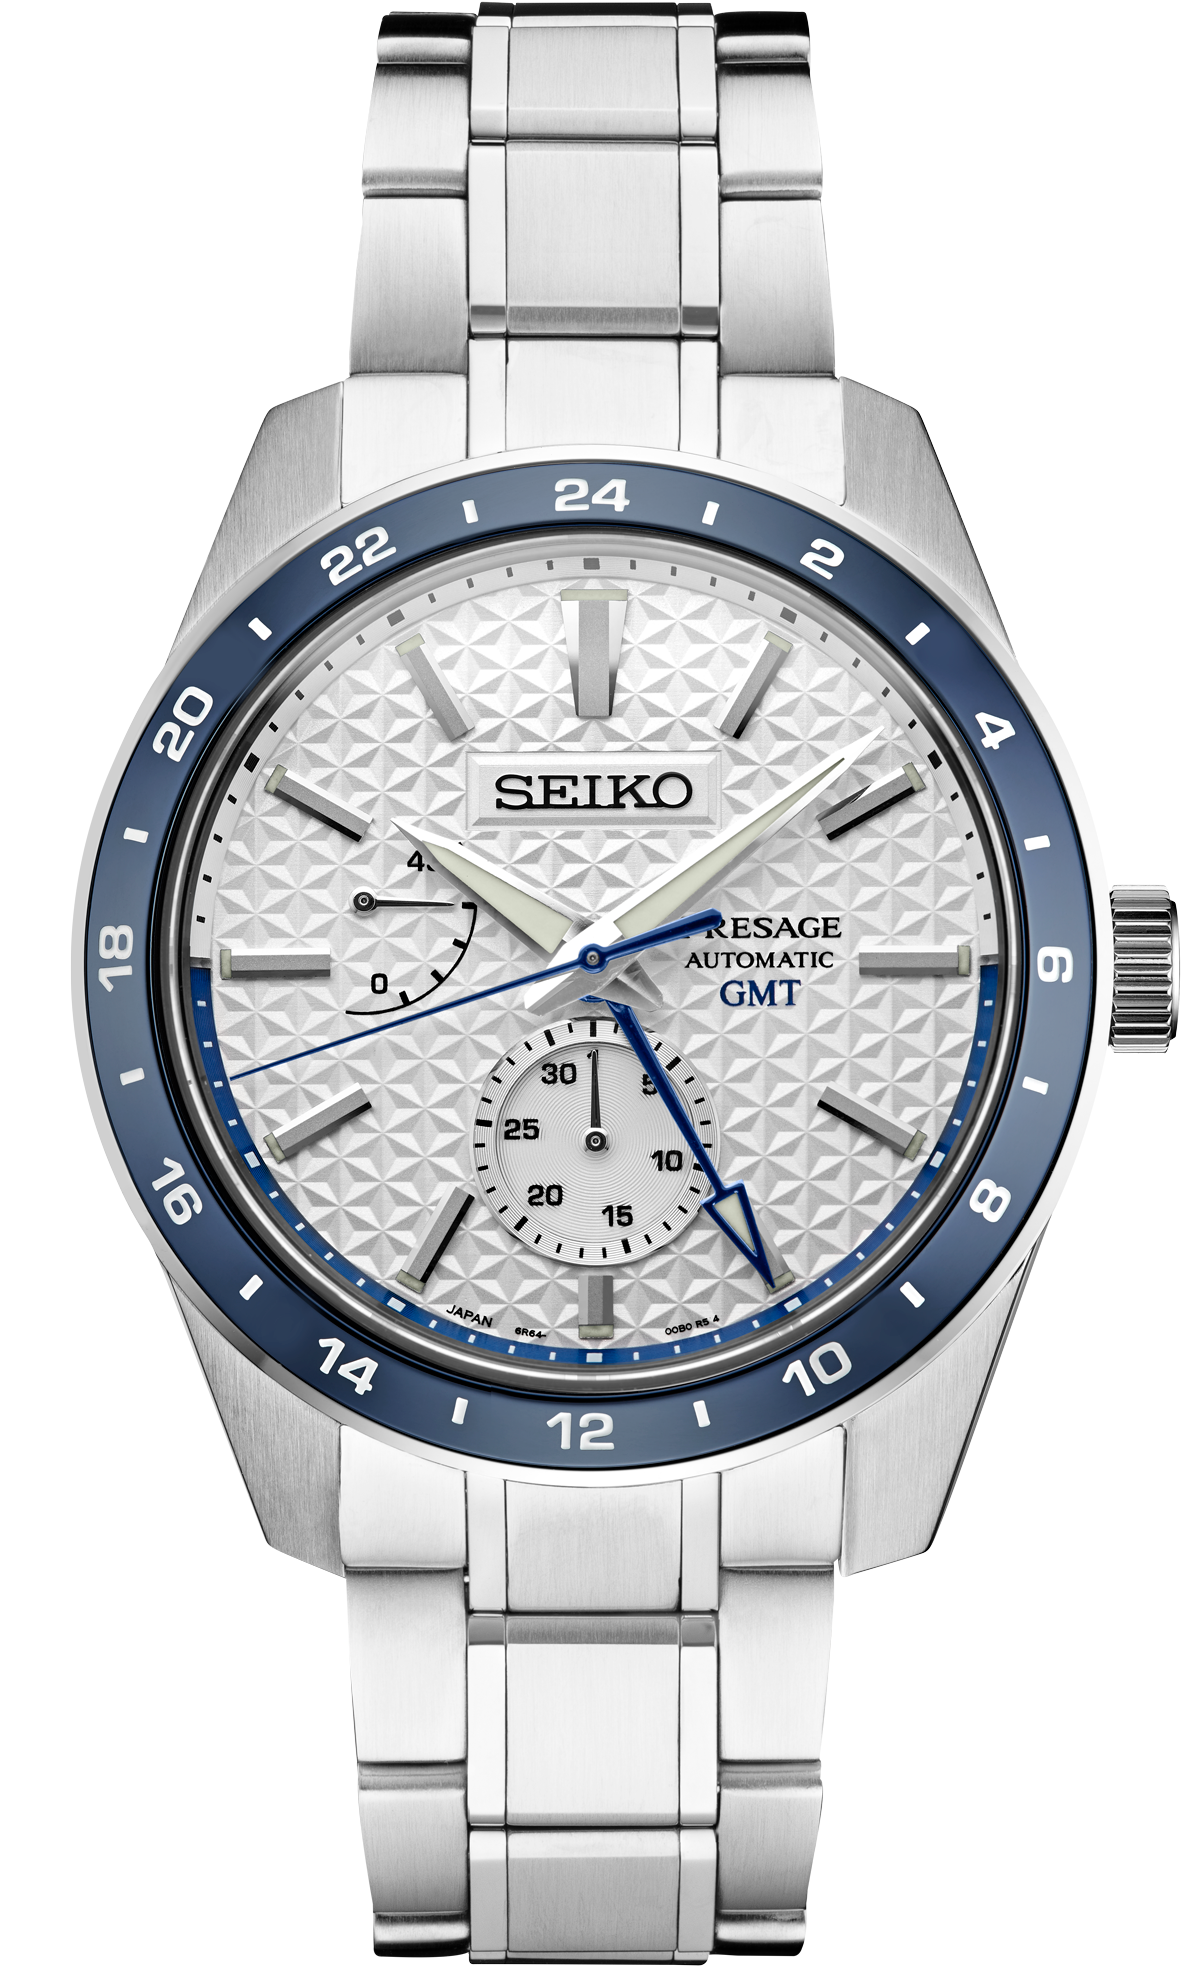 SEIKO PRESAGE SHARP-EDGED SERIES GMT - SPB223